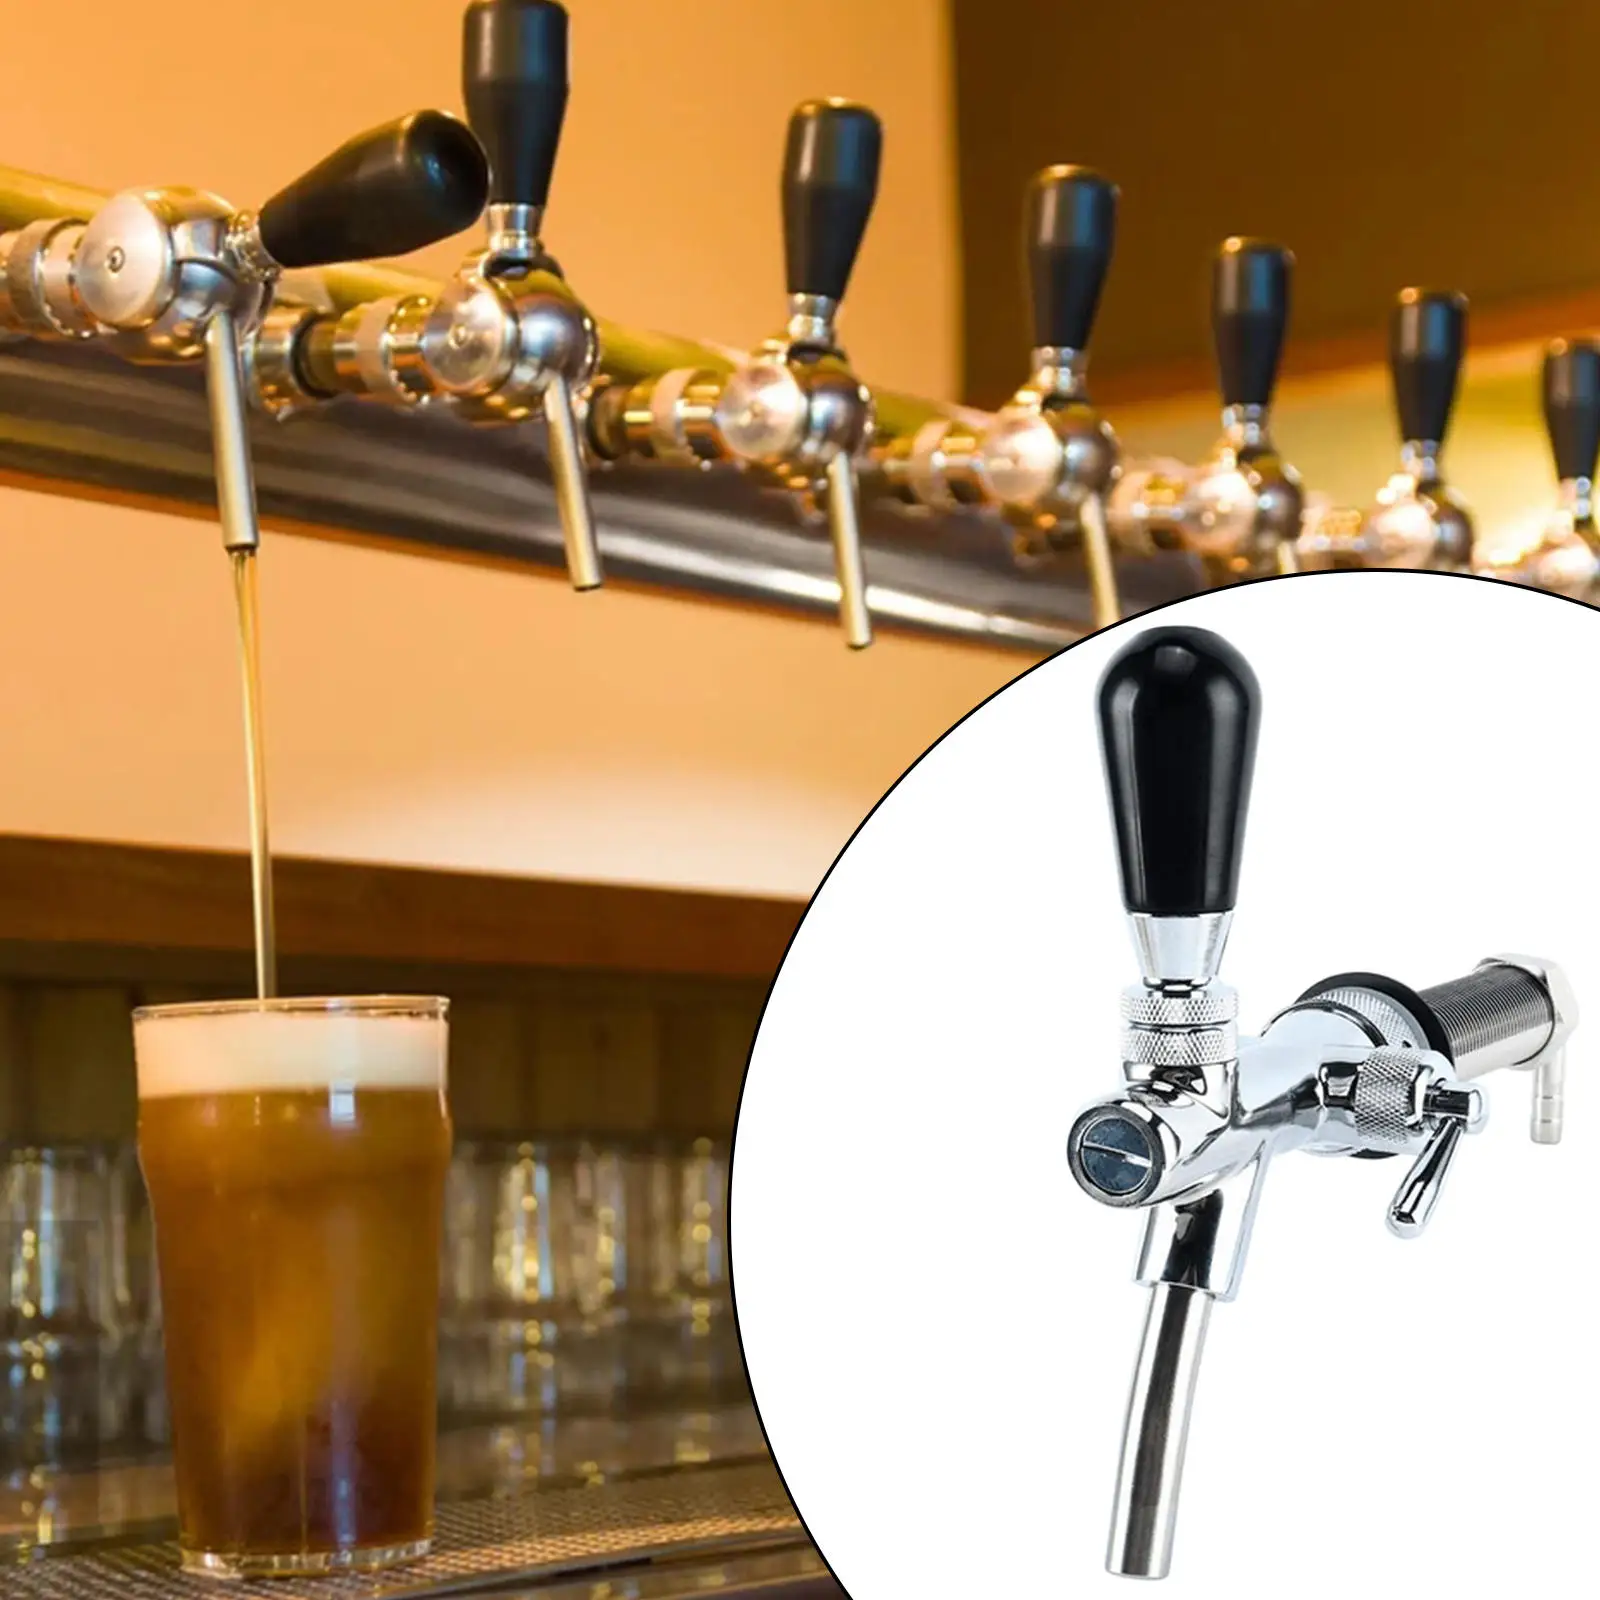 Stainless Steel Beer Faucet Draft Beer Faucet Beer Keg Tap Controllable Flow Longer Spout for Beer Kegging Homebrew Home Bar